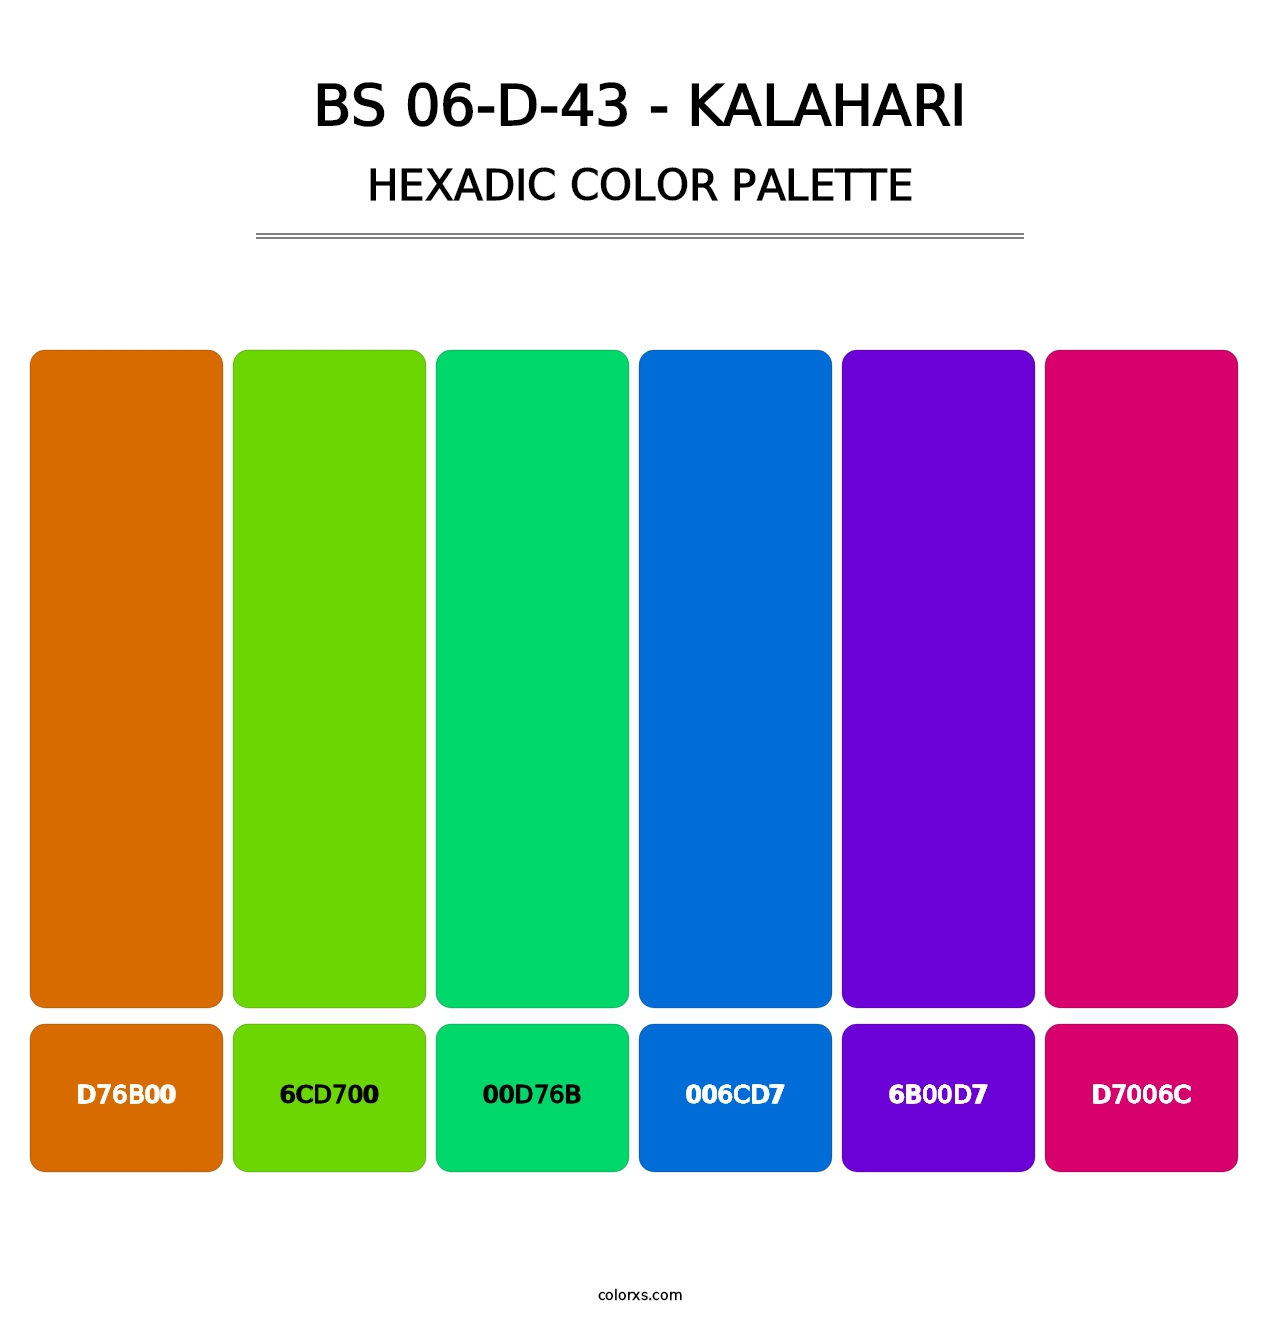 BS 06-D-43 - Kalahari - Hexadic Color Palette